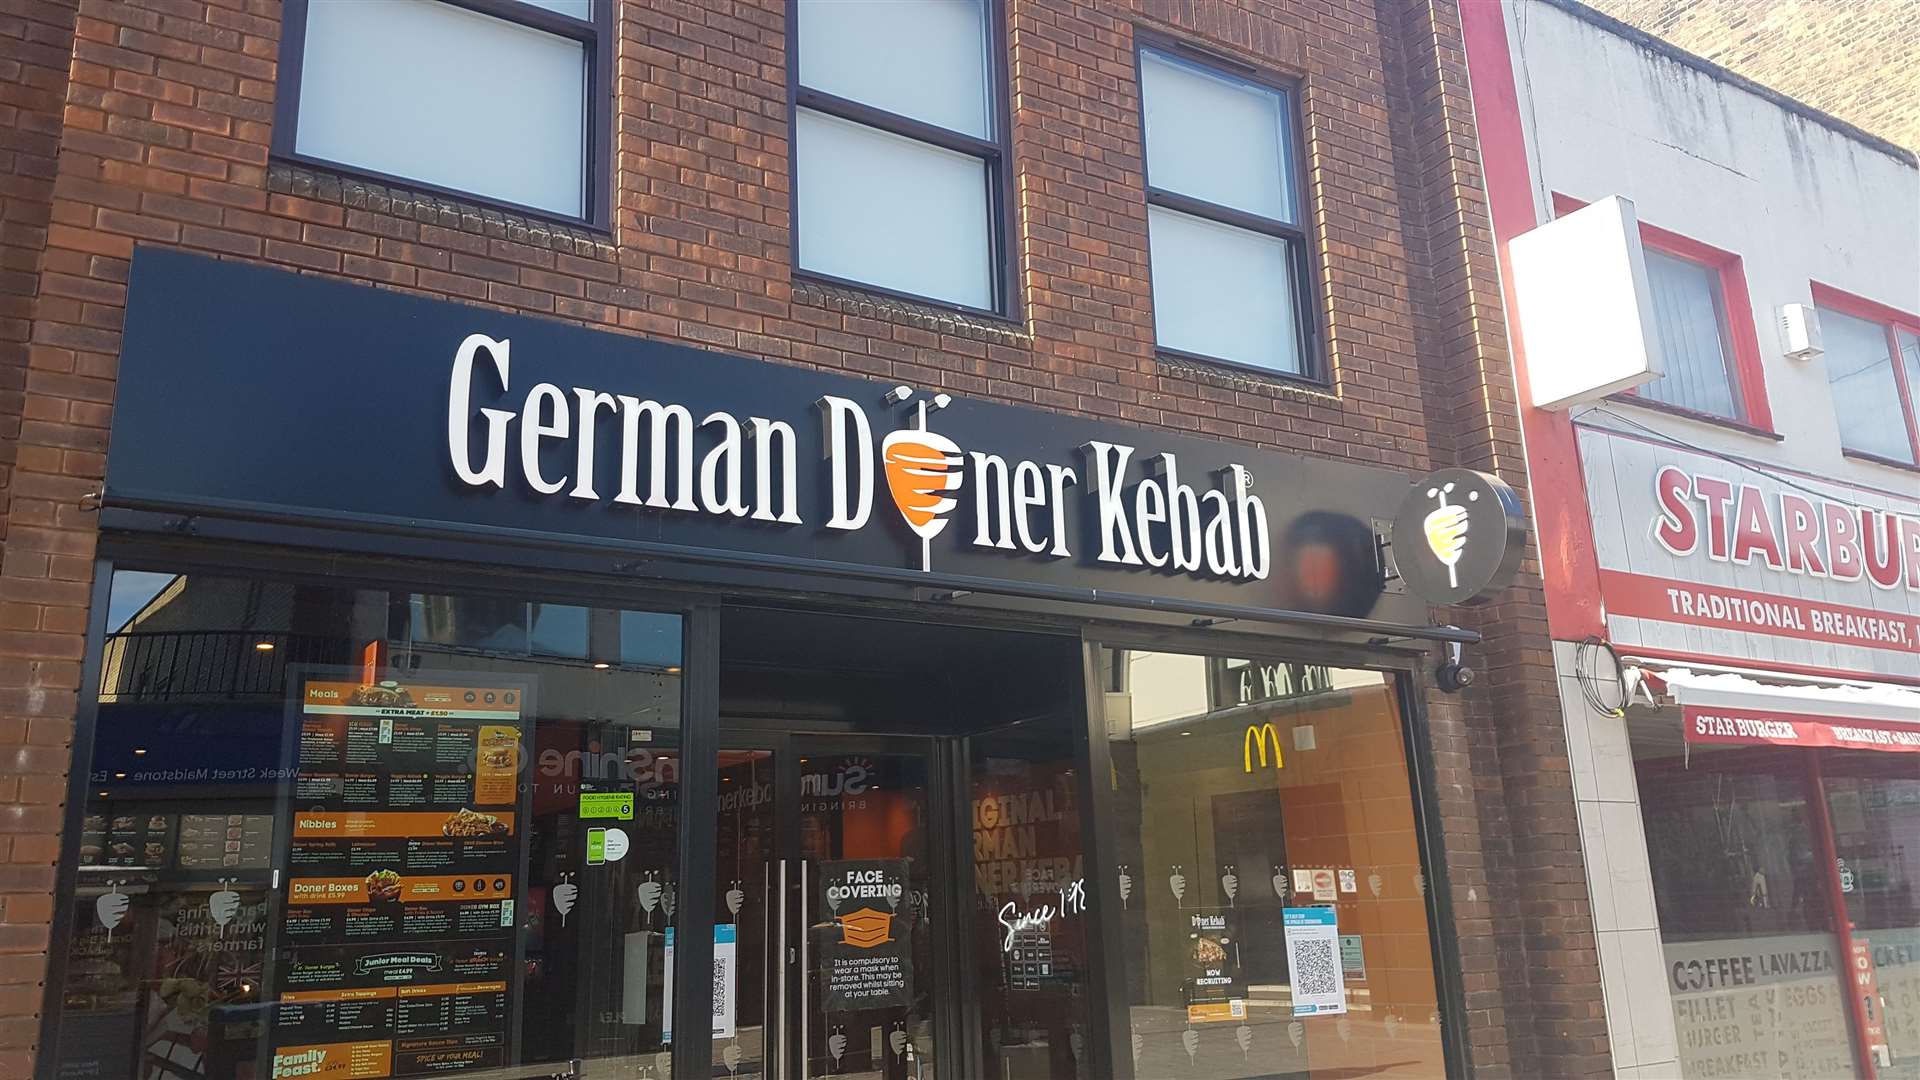 German Doner Kebab is opening in Canterbury this month